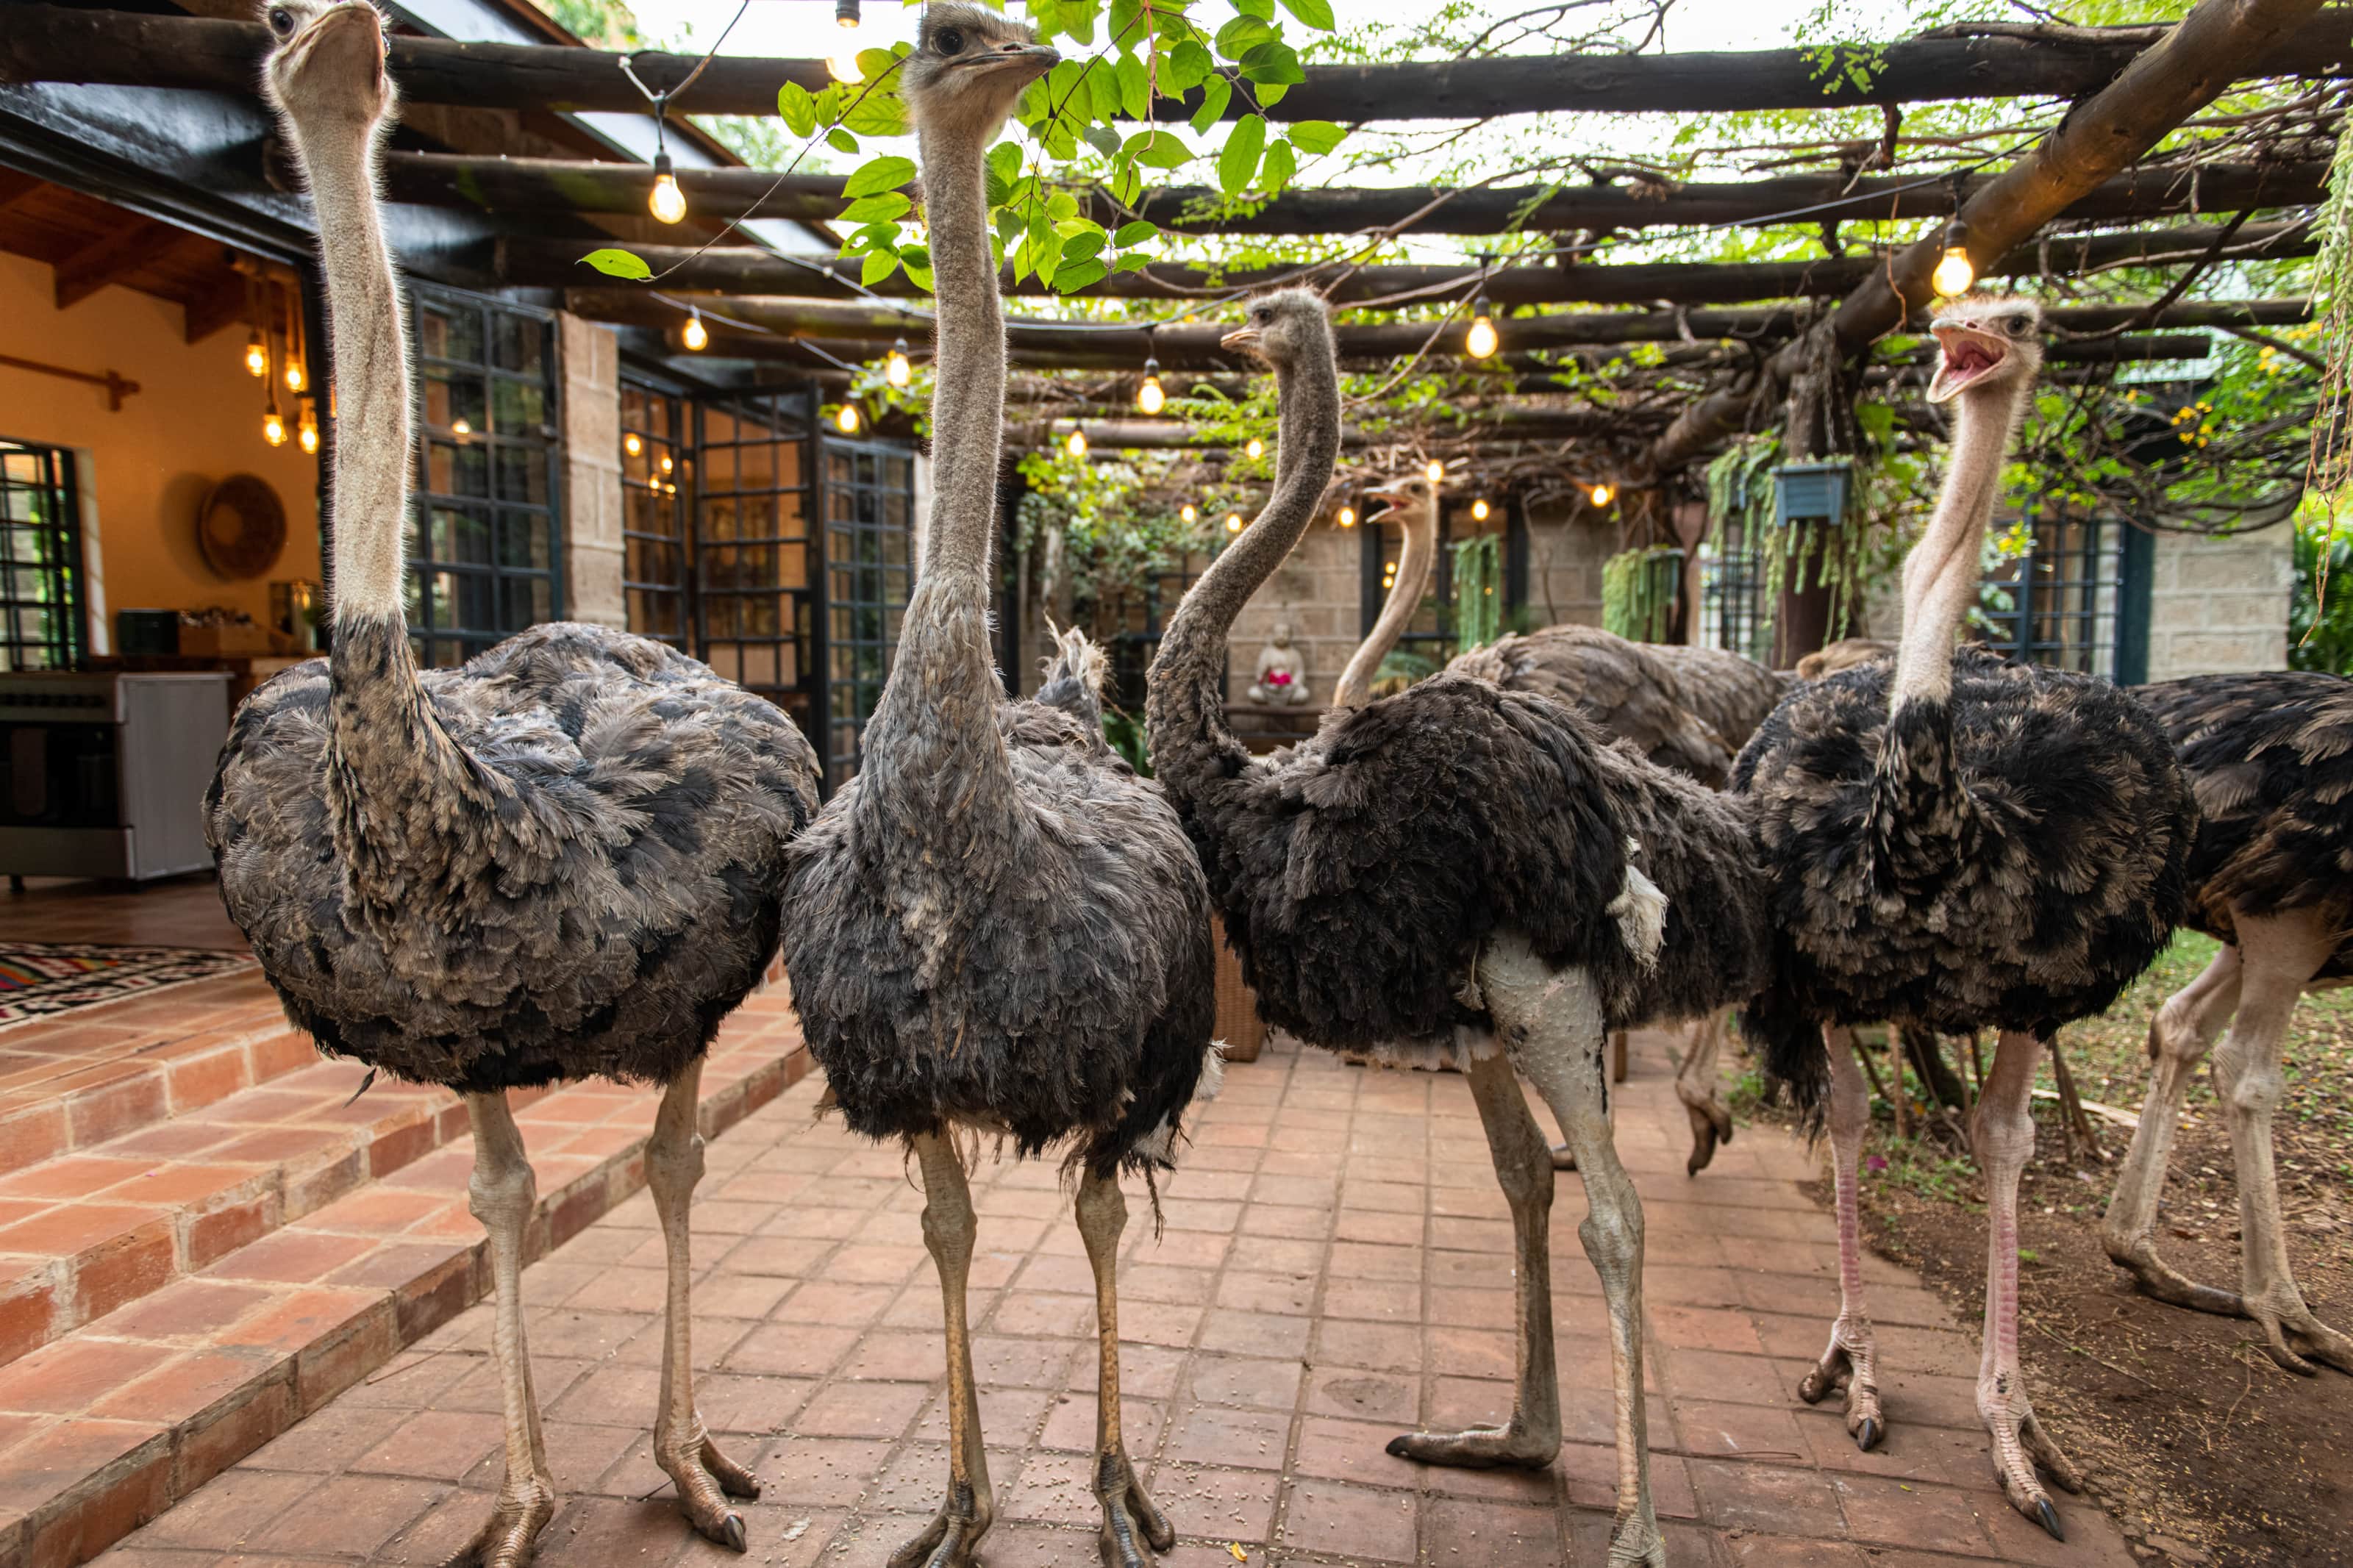 The ostriches at the farm.jpg